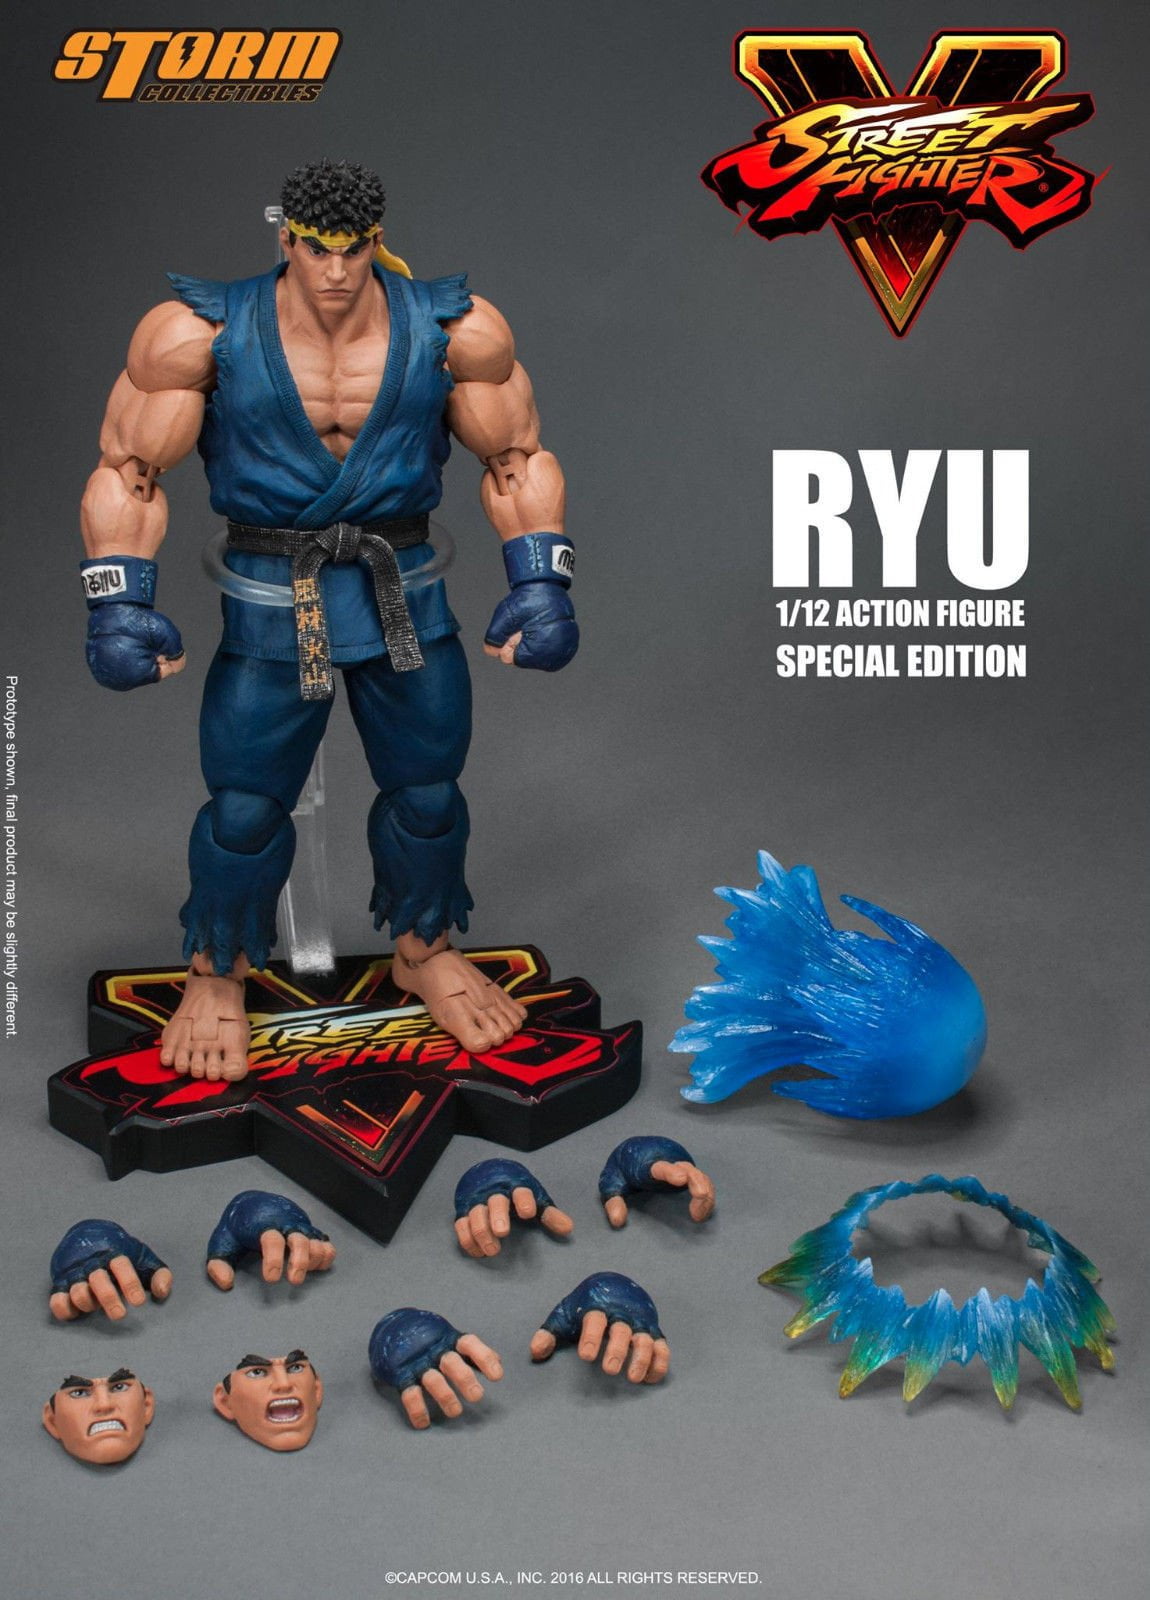 BRAND NEW FACTORY SEALED Ryu Capcom Special Edition Tin Card Game